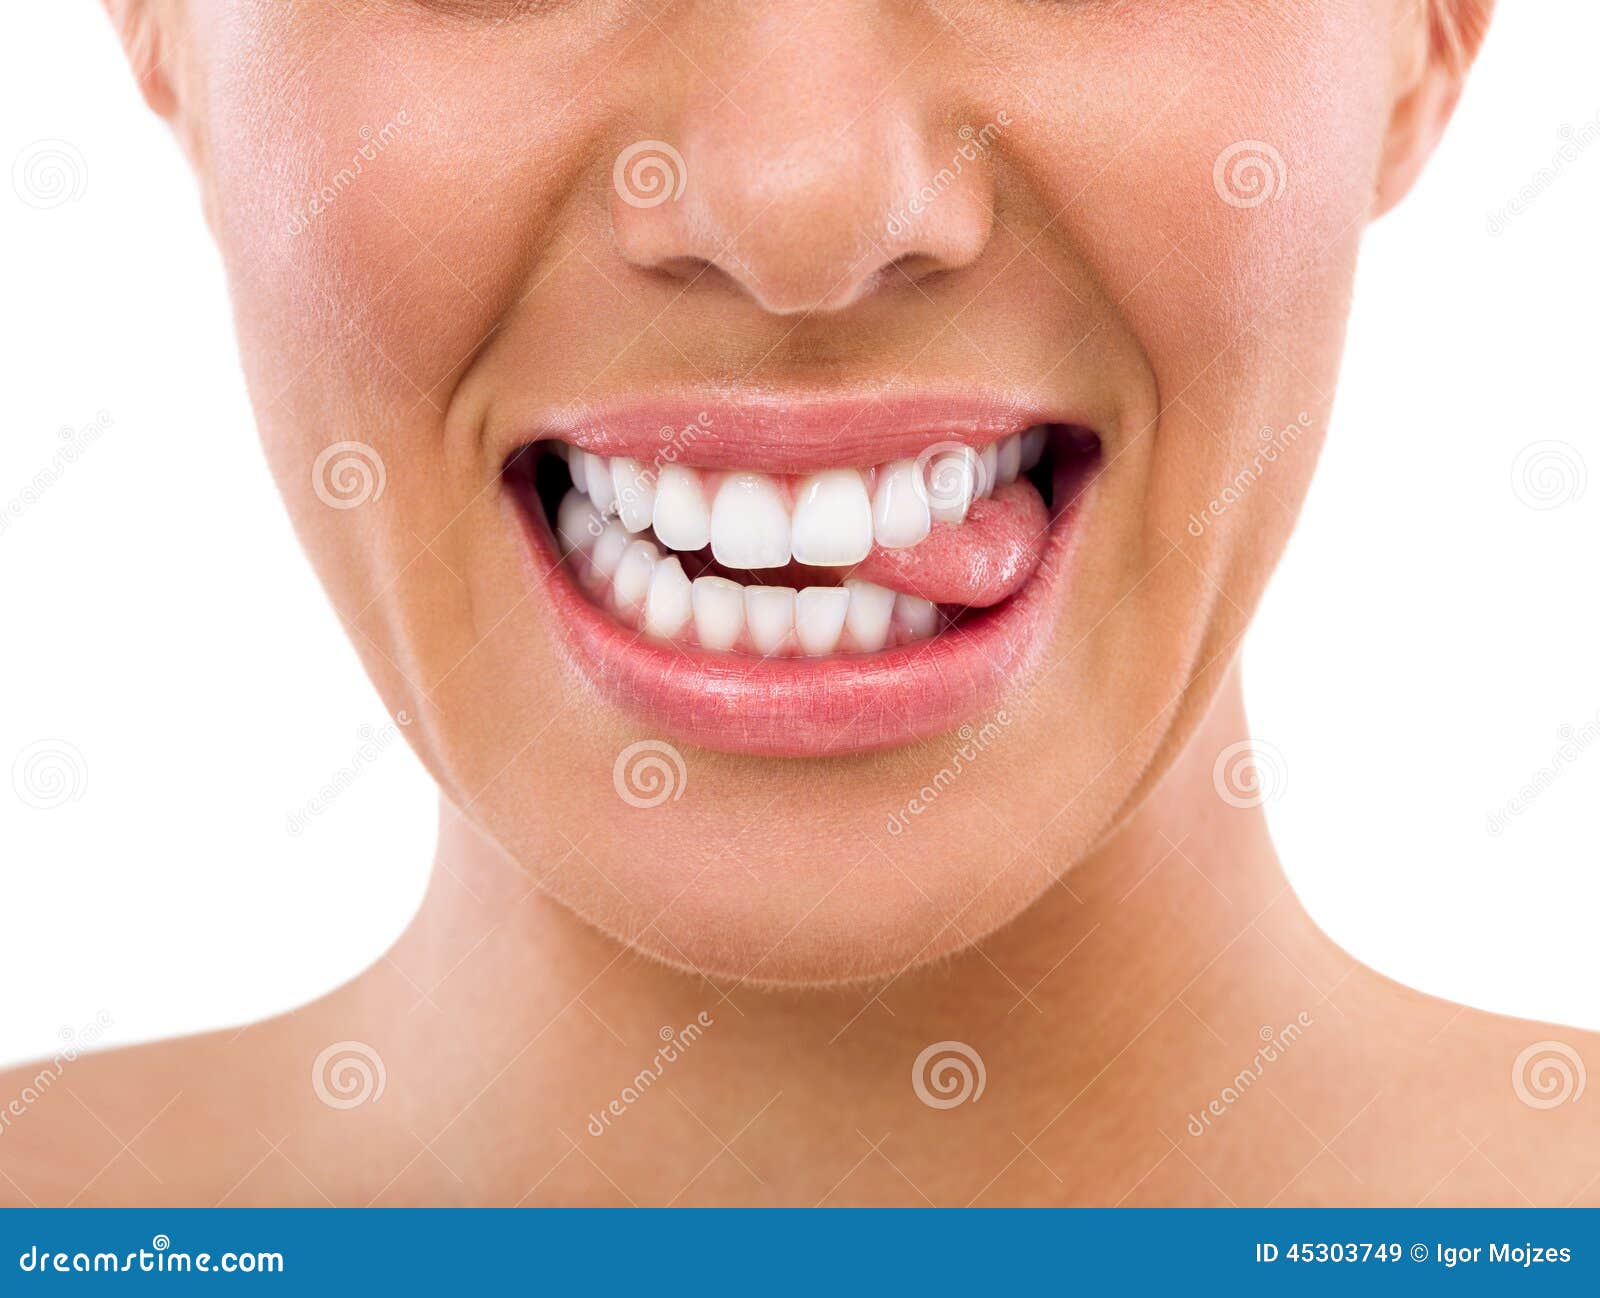 female-biting-tongue-perfect-teeth-white-45303749.jpg